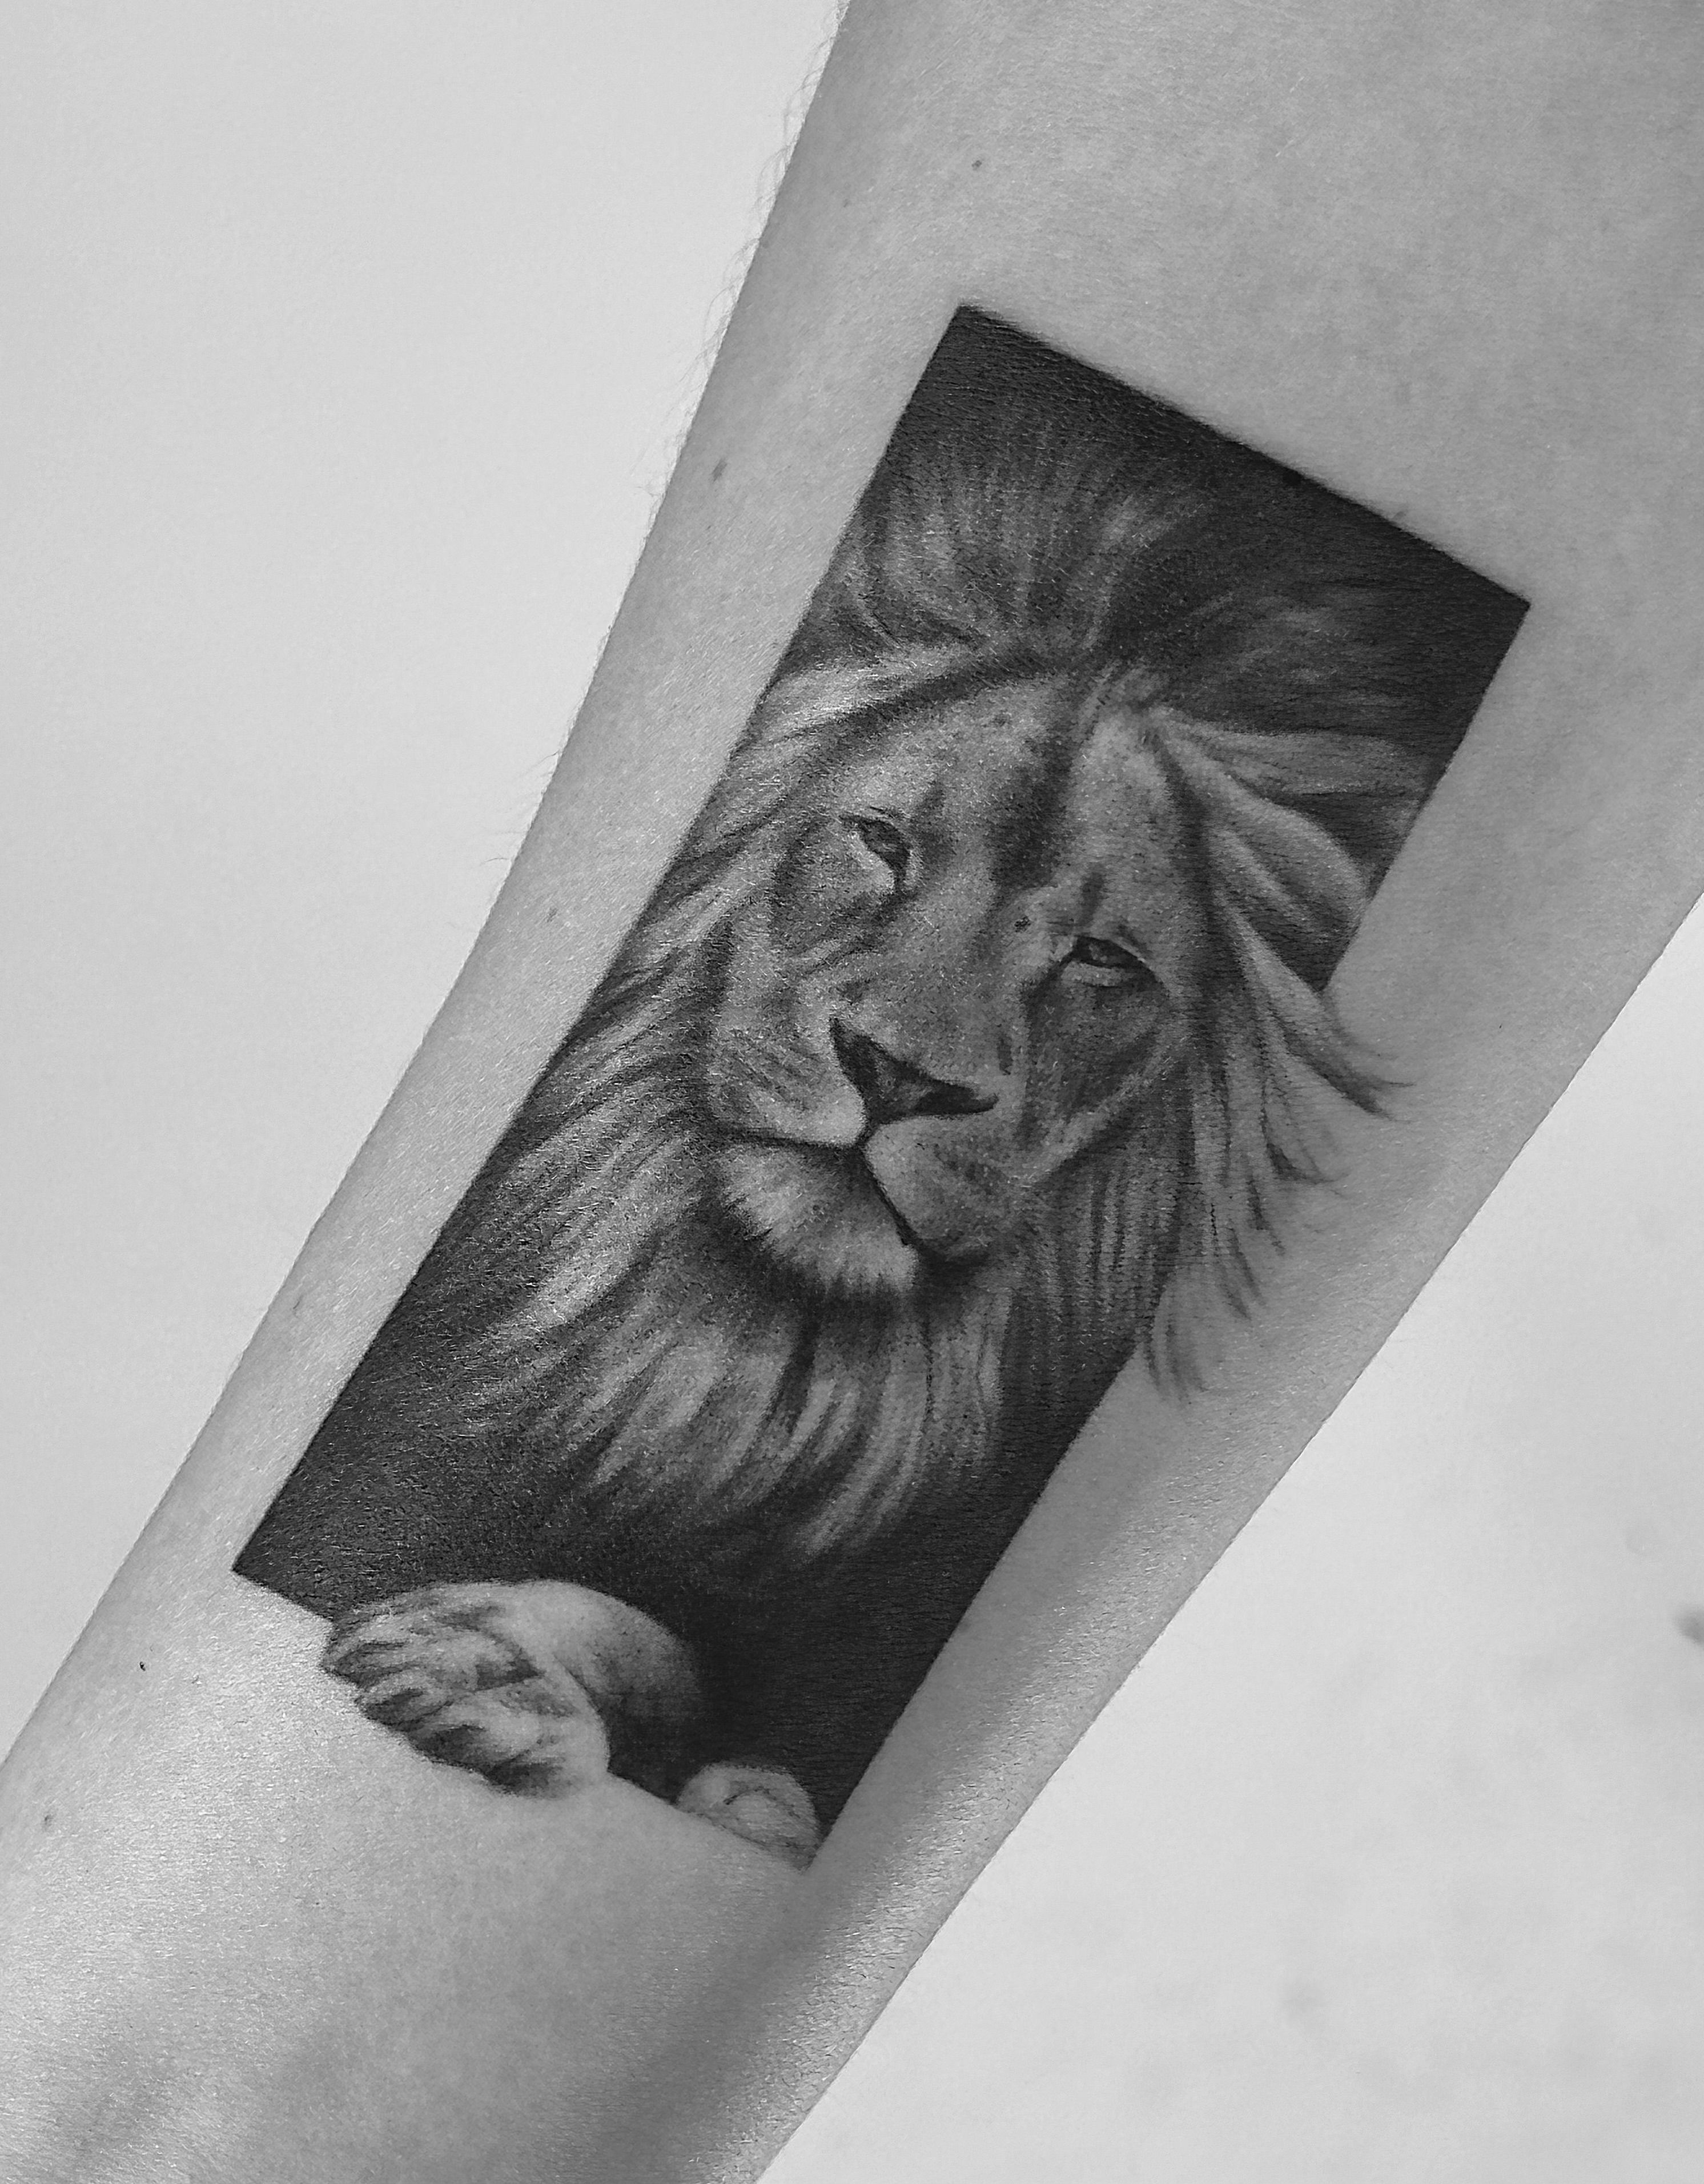 35 Best Lion Tattoos For Men: Ideas And Designs 2024 | FashionBeans